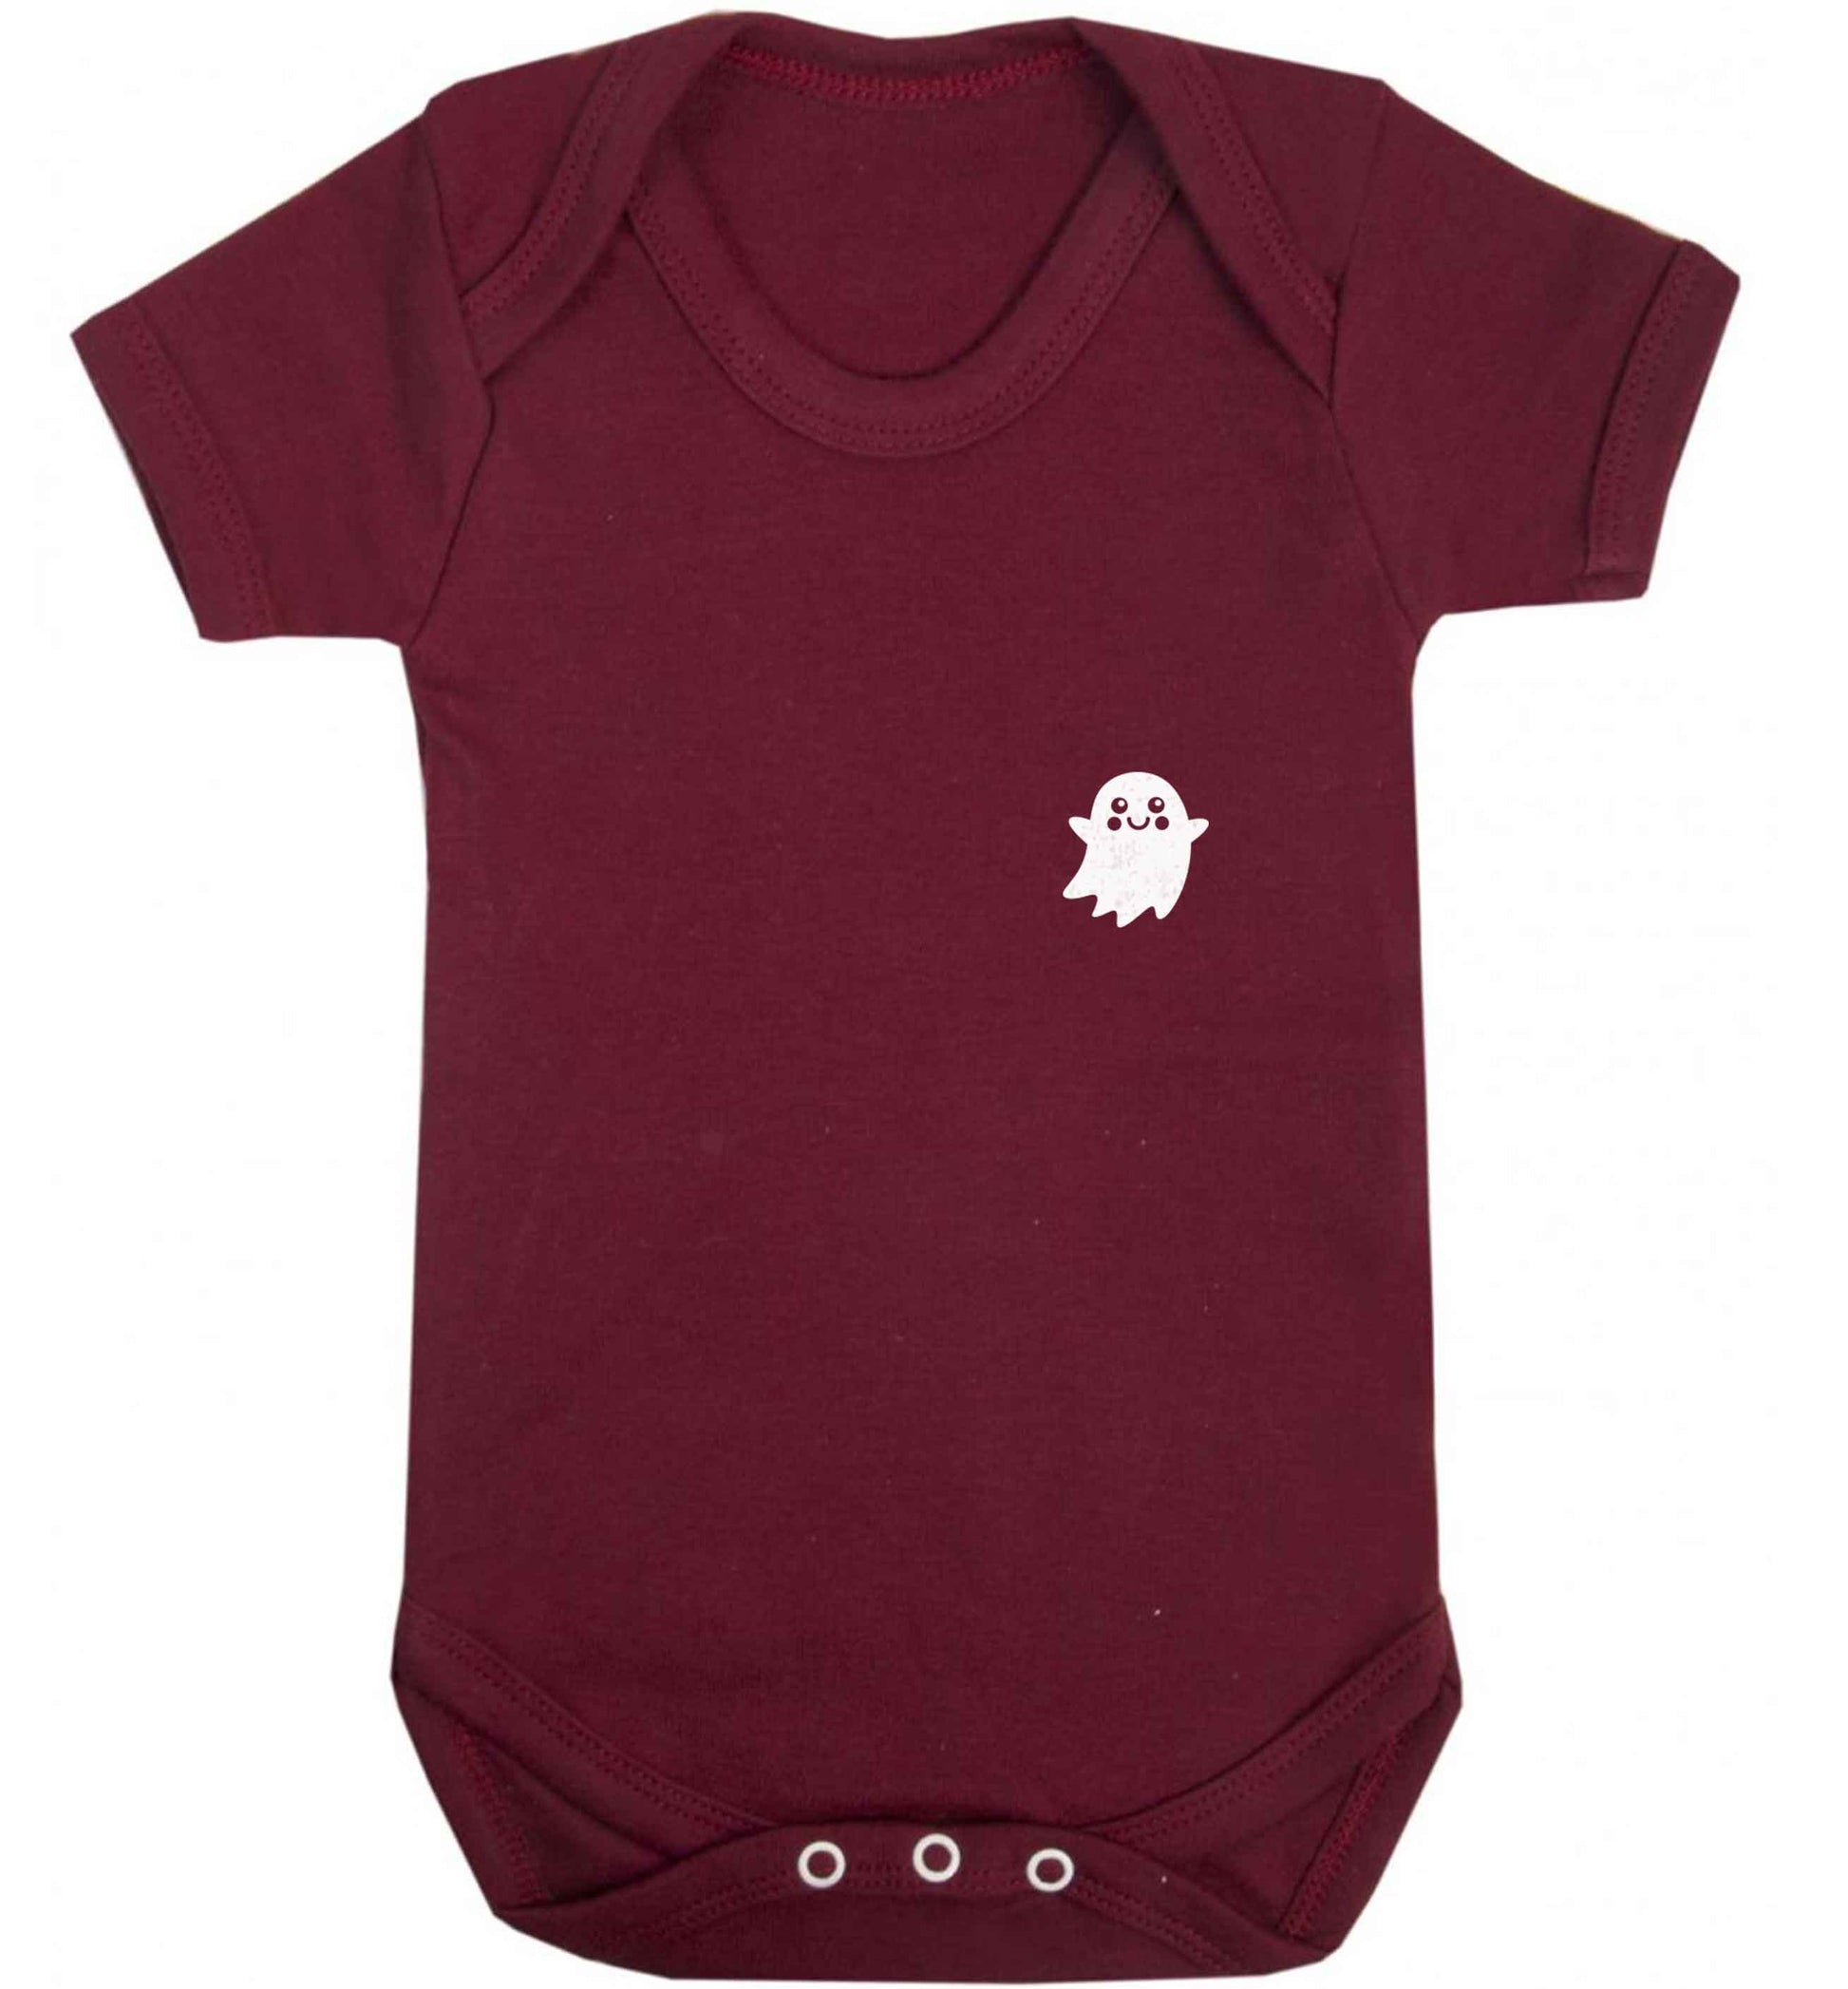 Pocket ghost baby vest maroon 18-24 months